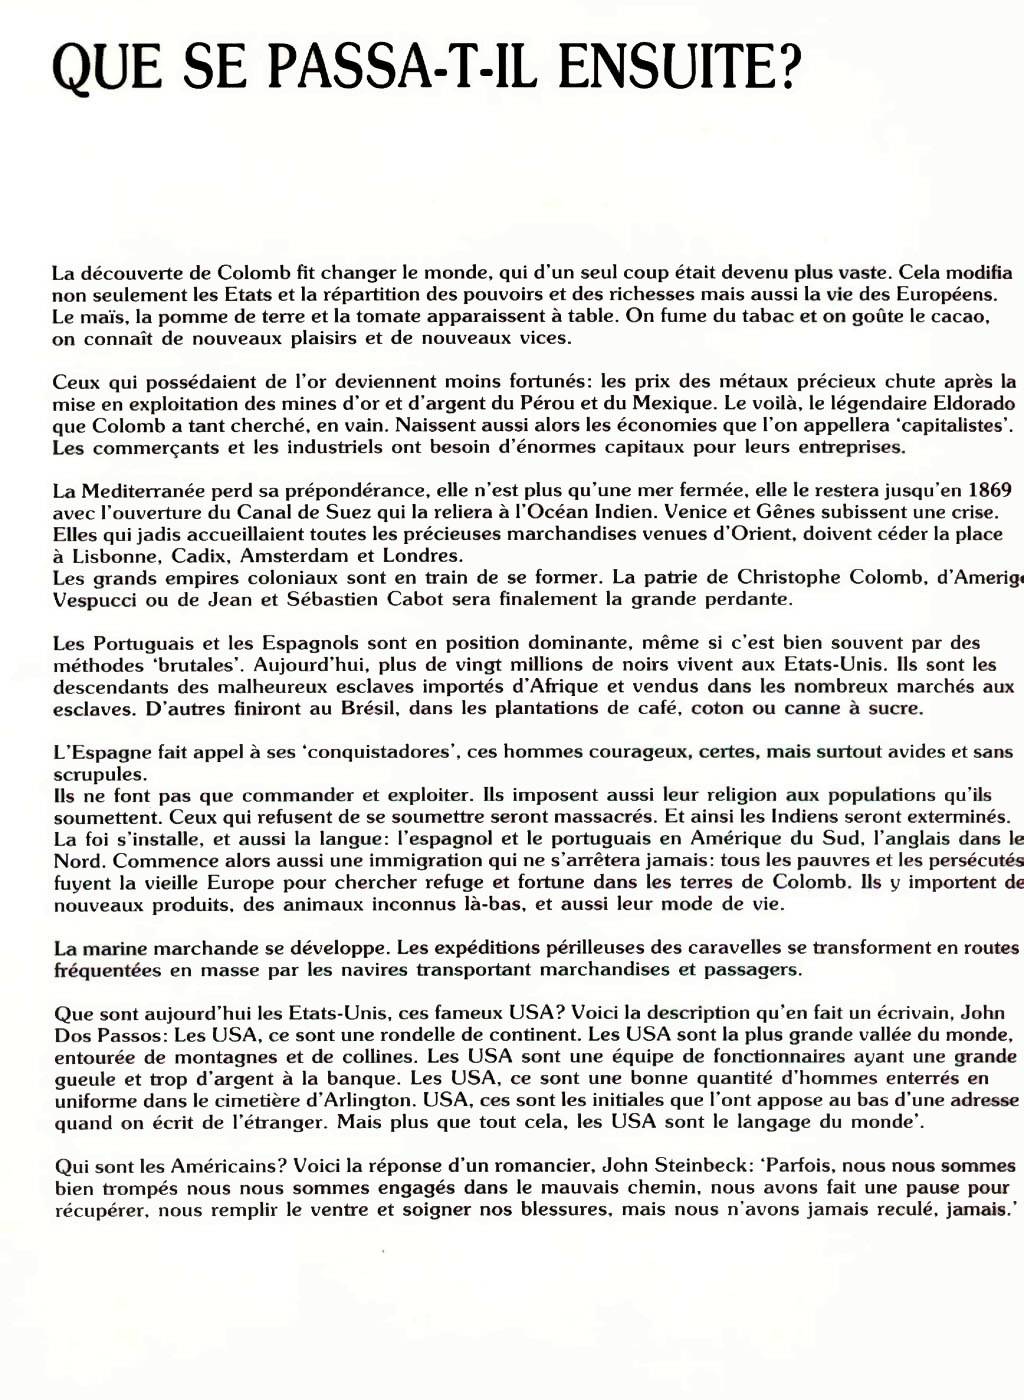 [Milo Manara] Christophe Colomb [French] 